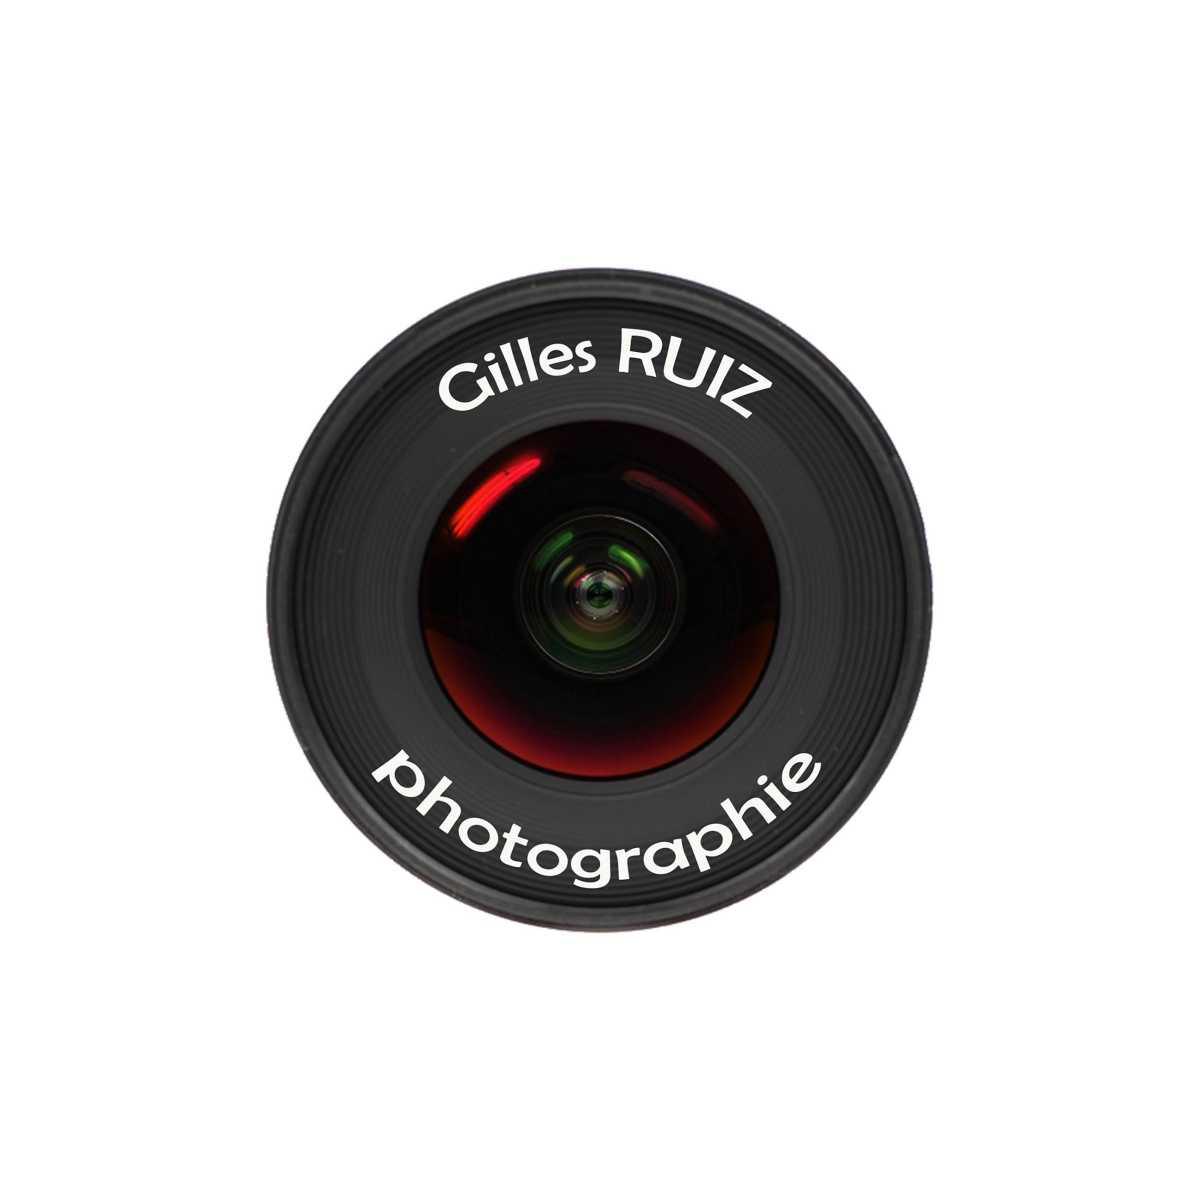 GILLES RUIZ, PHOTOGRAPHIE